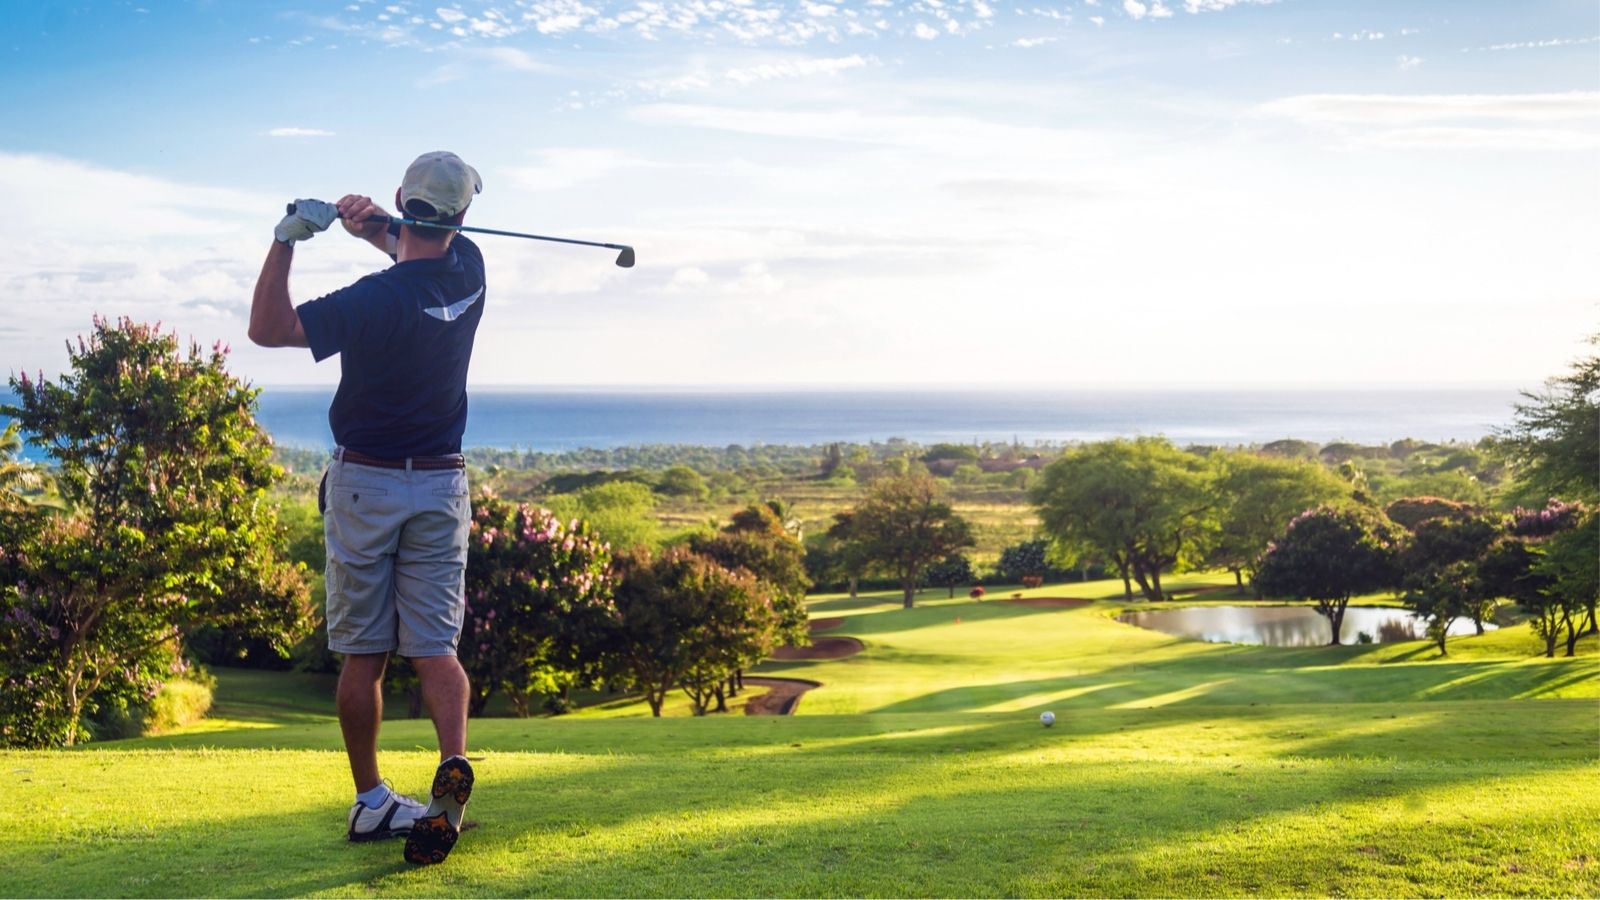 Man hitting golf ball down hill towards ocean and horizon (Photo: Shutterstock)